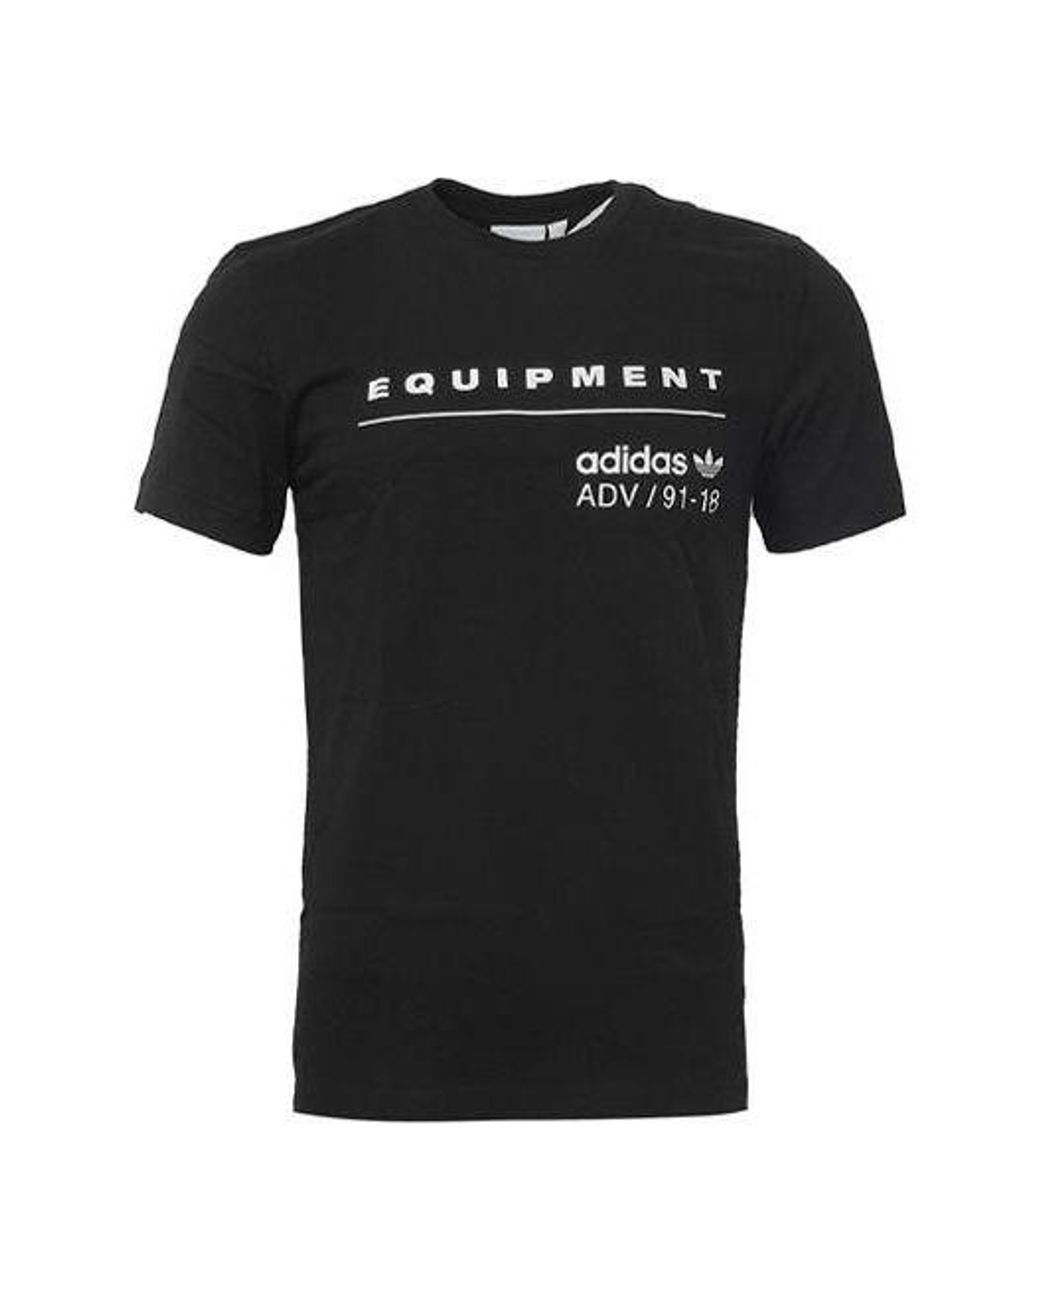 adidas Adida Original Pdx Claic Tee Athleiure Caual Port Alphabet Printing  Round Neck Hort Leeve Black for Men | Lyst